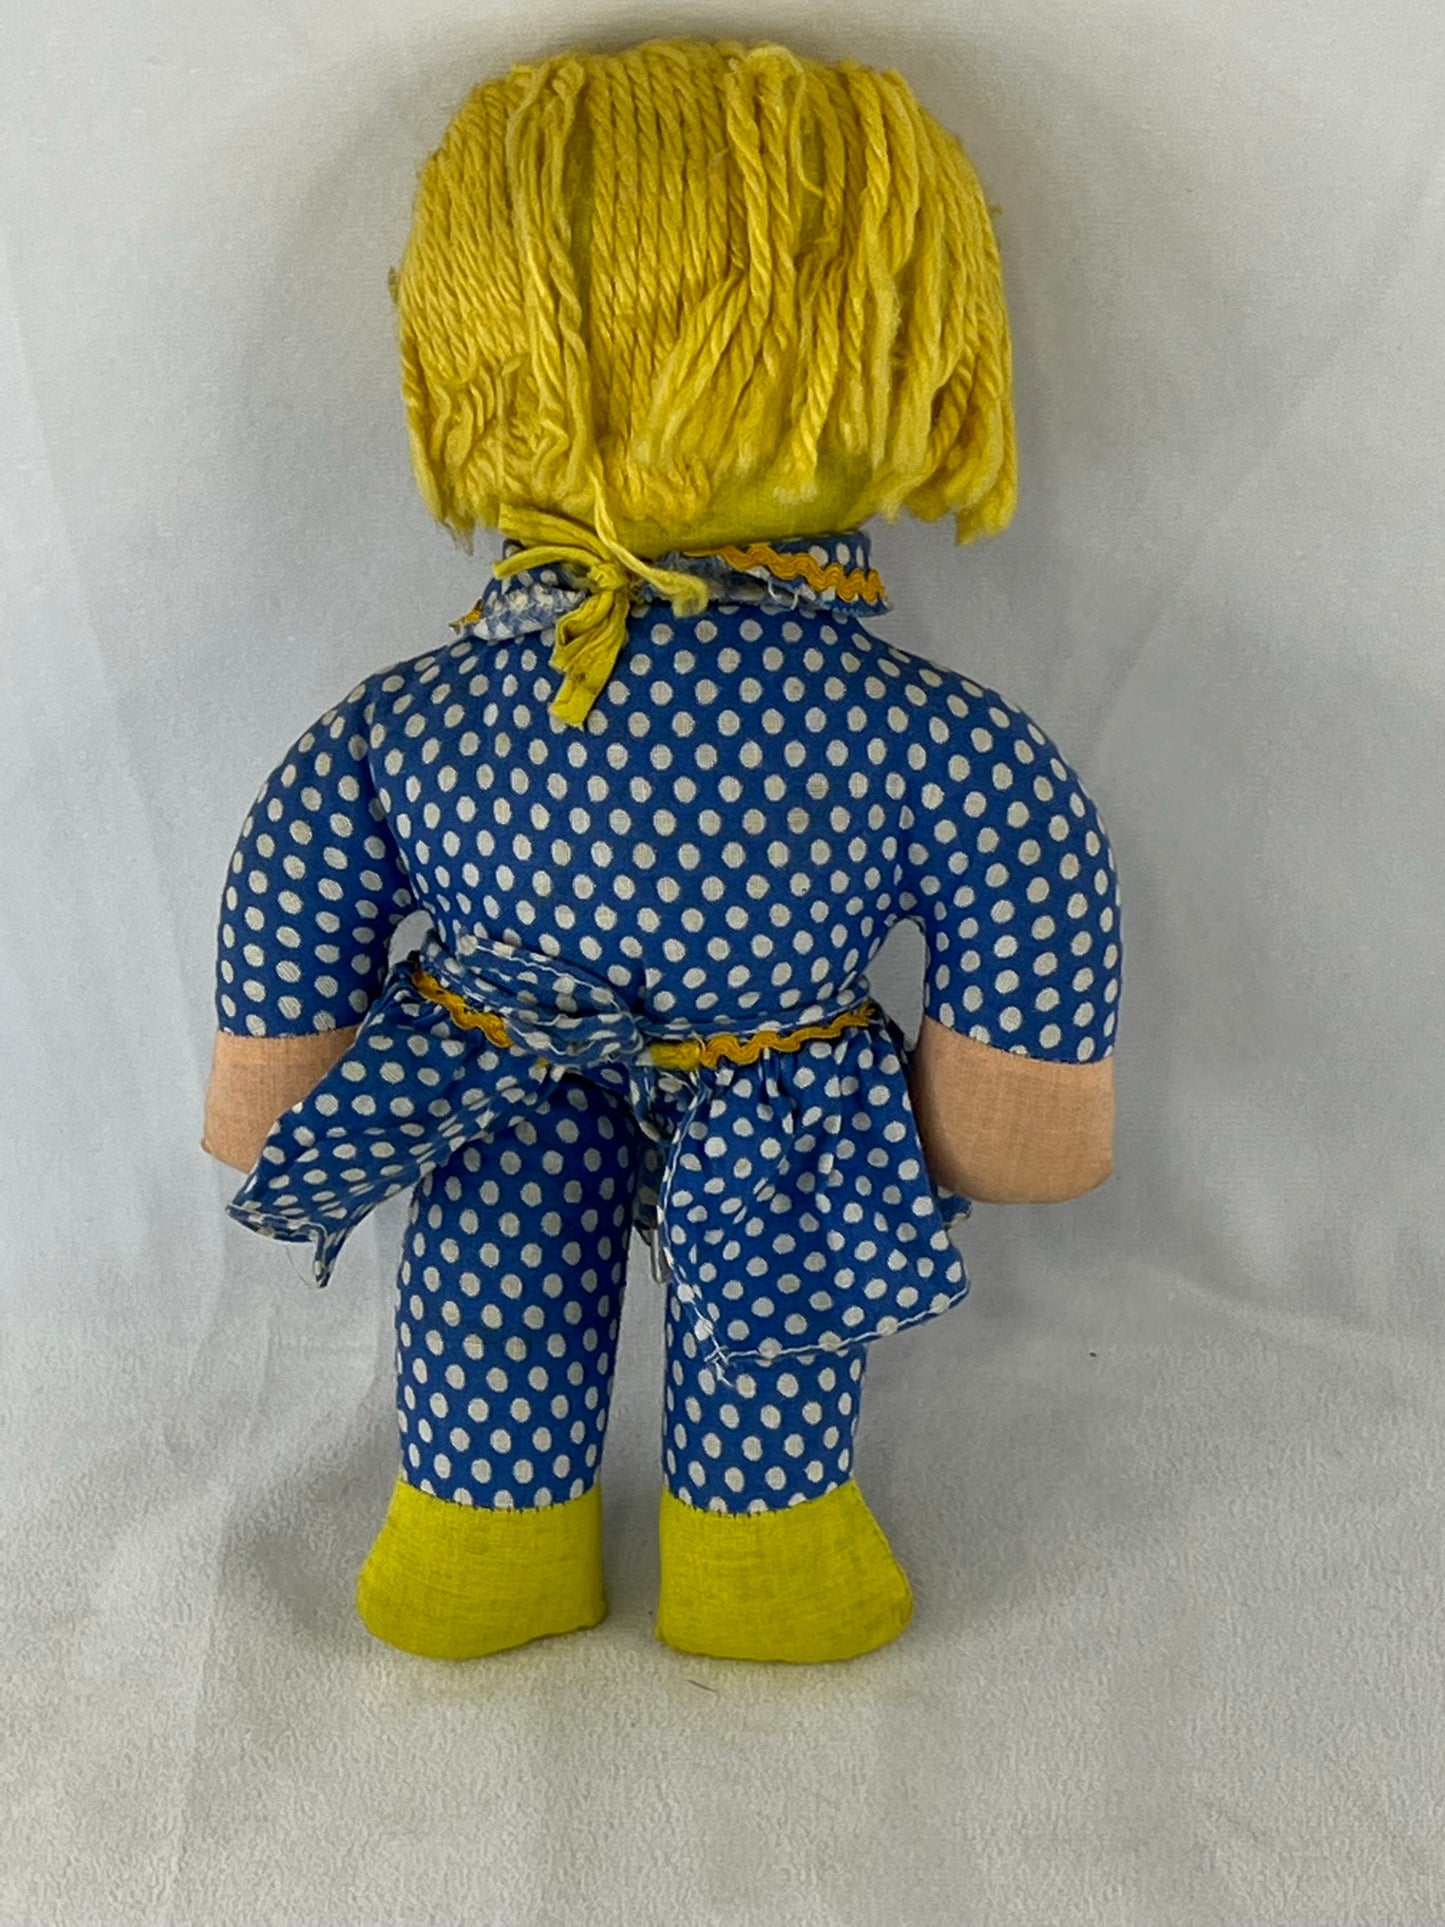 Vintage 1970's Mrs. Beasley Soft Cloth Rag Doll Made In Hong Kong 10 inch DE 3093